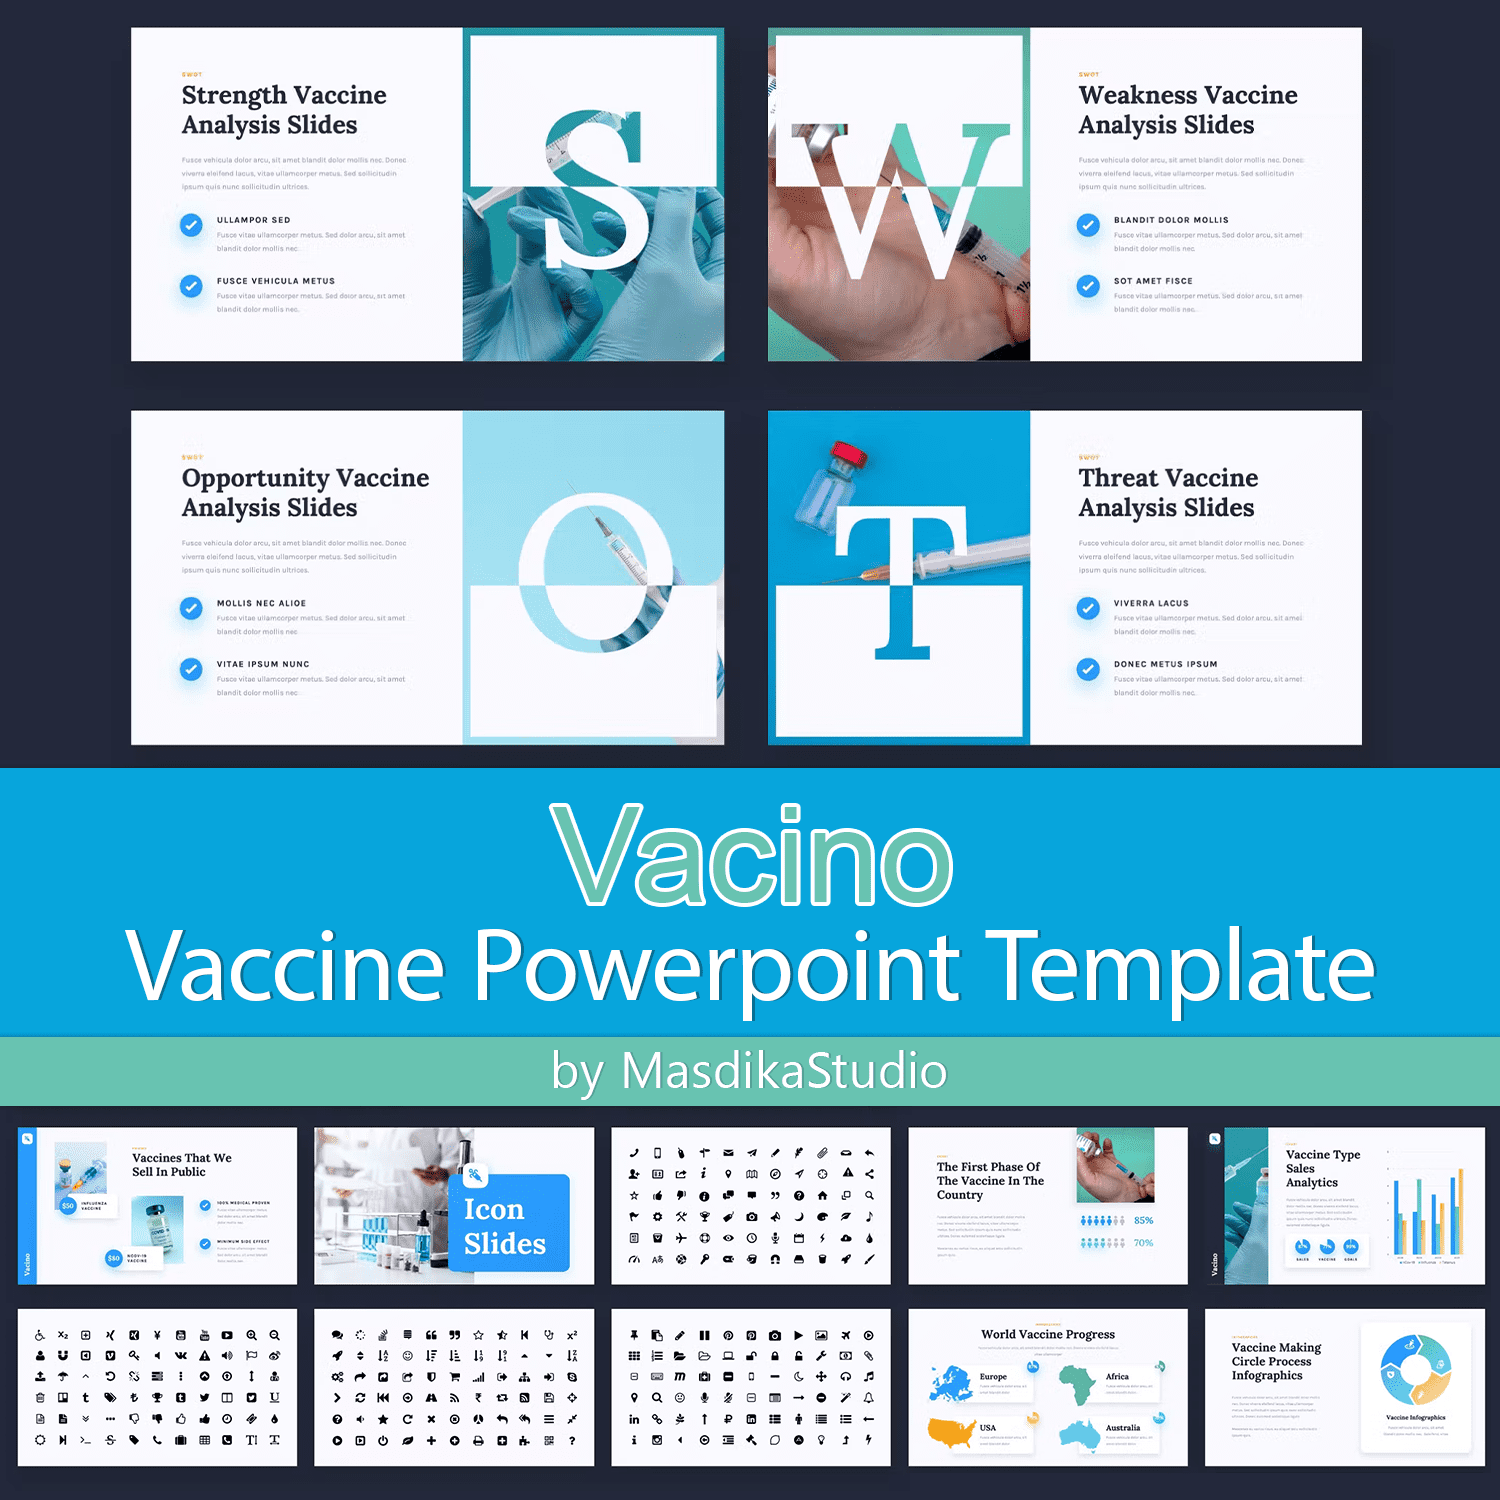 SWOT of the Vacino - Vaccine Powerpoint Template.